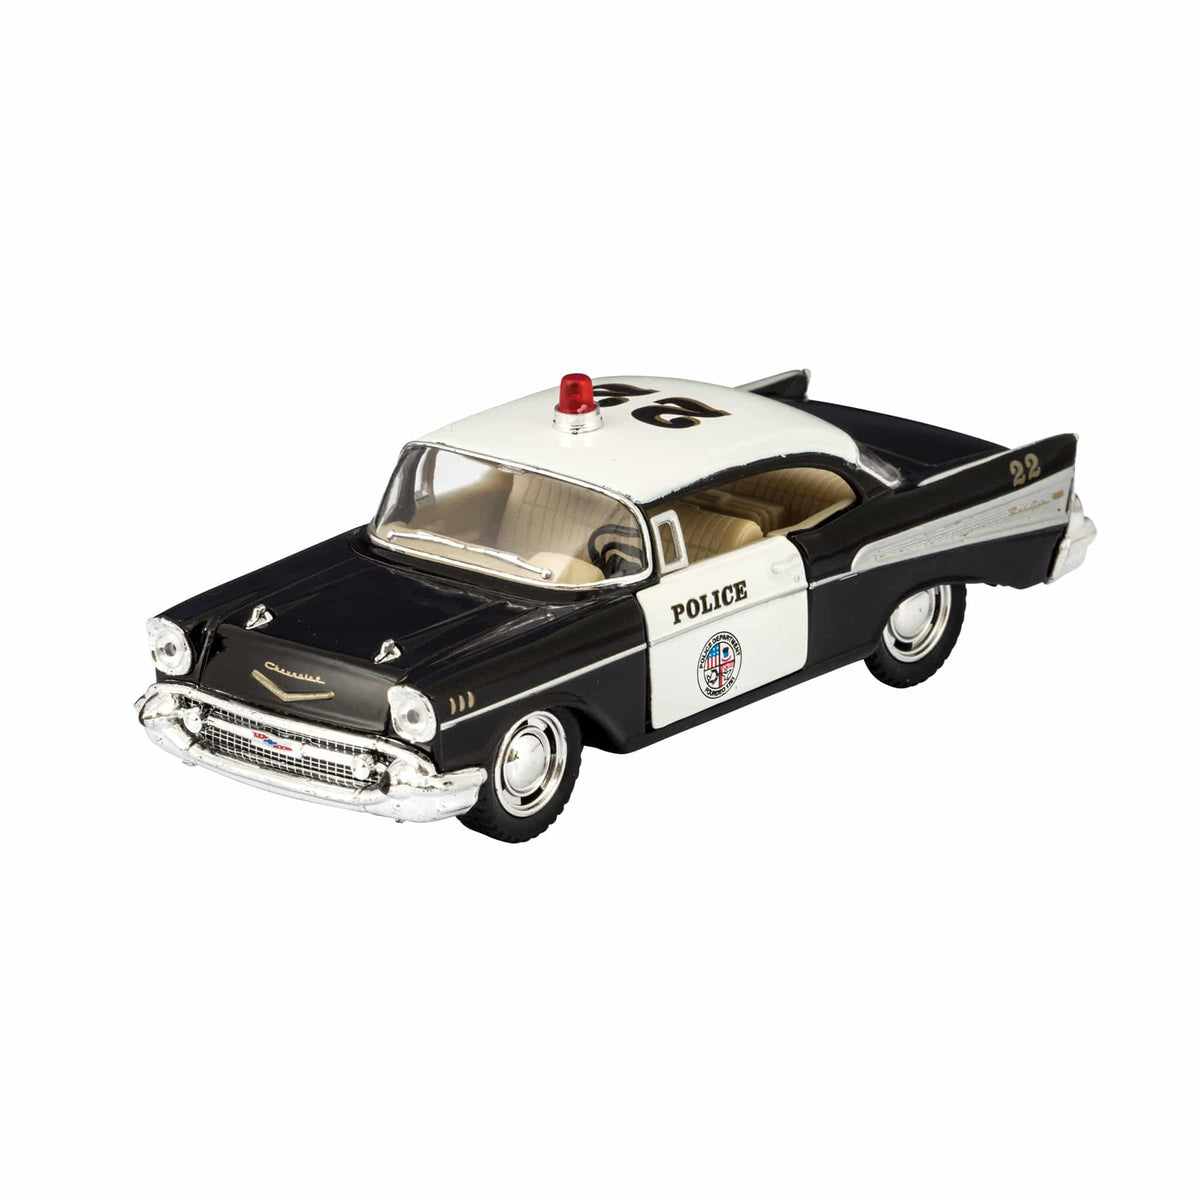 Chevy Bel Air police car.